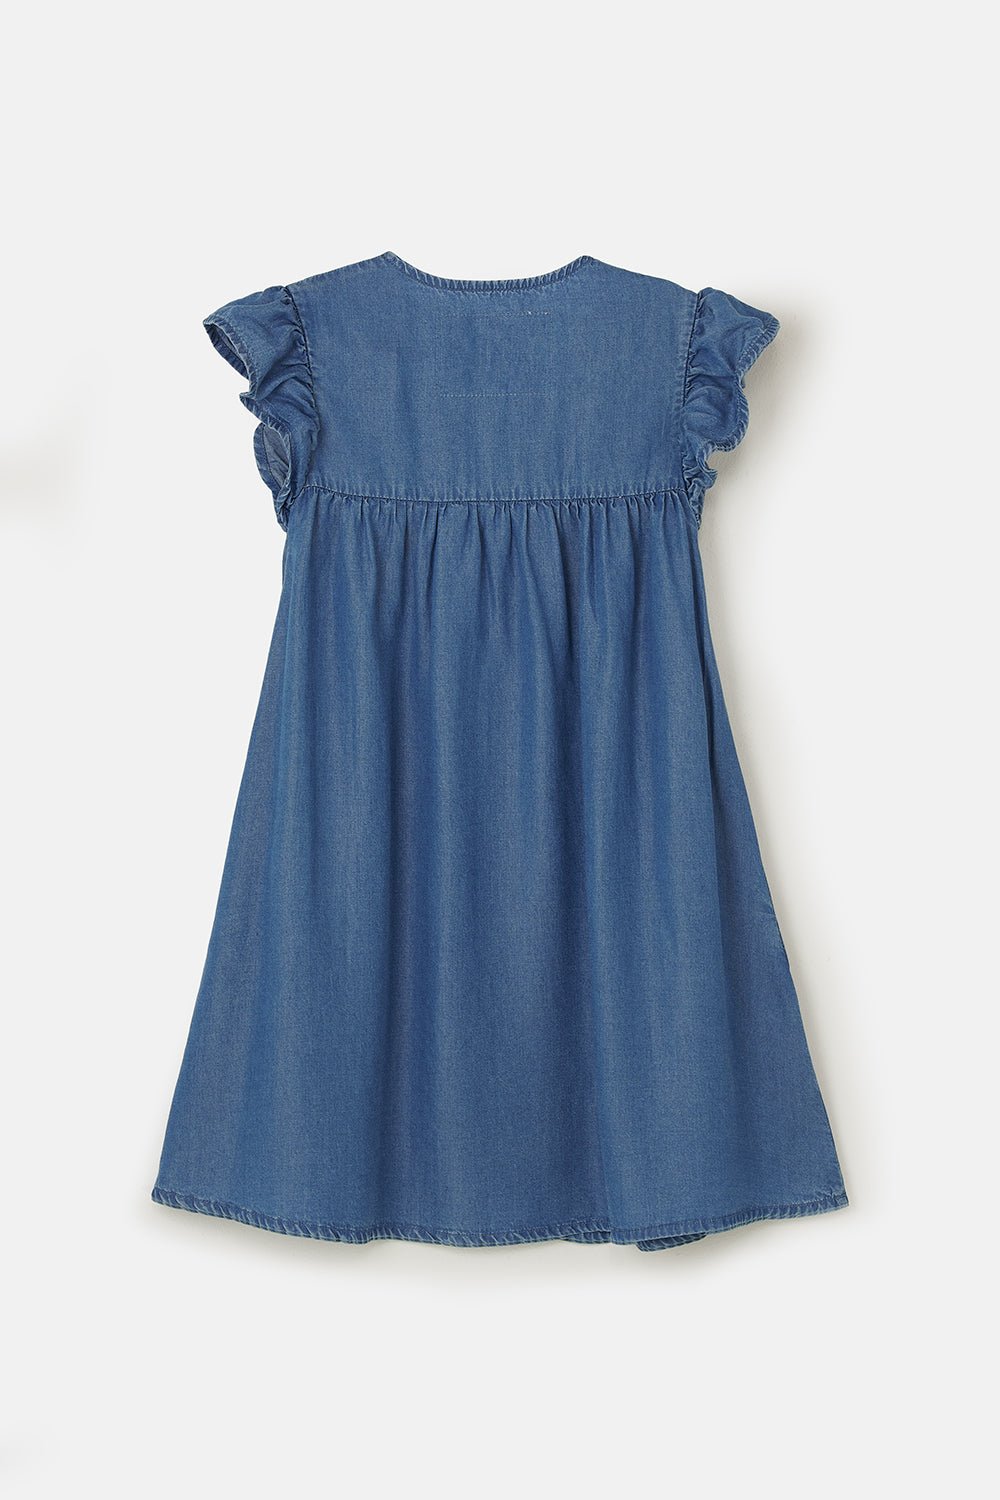 Lexie kids' dress, Soft Denim